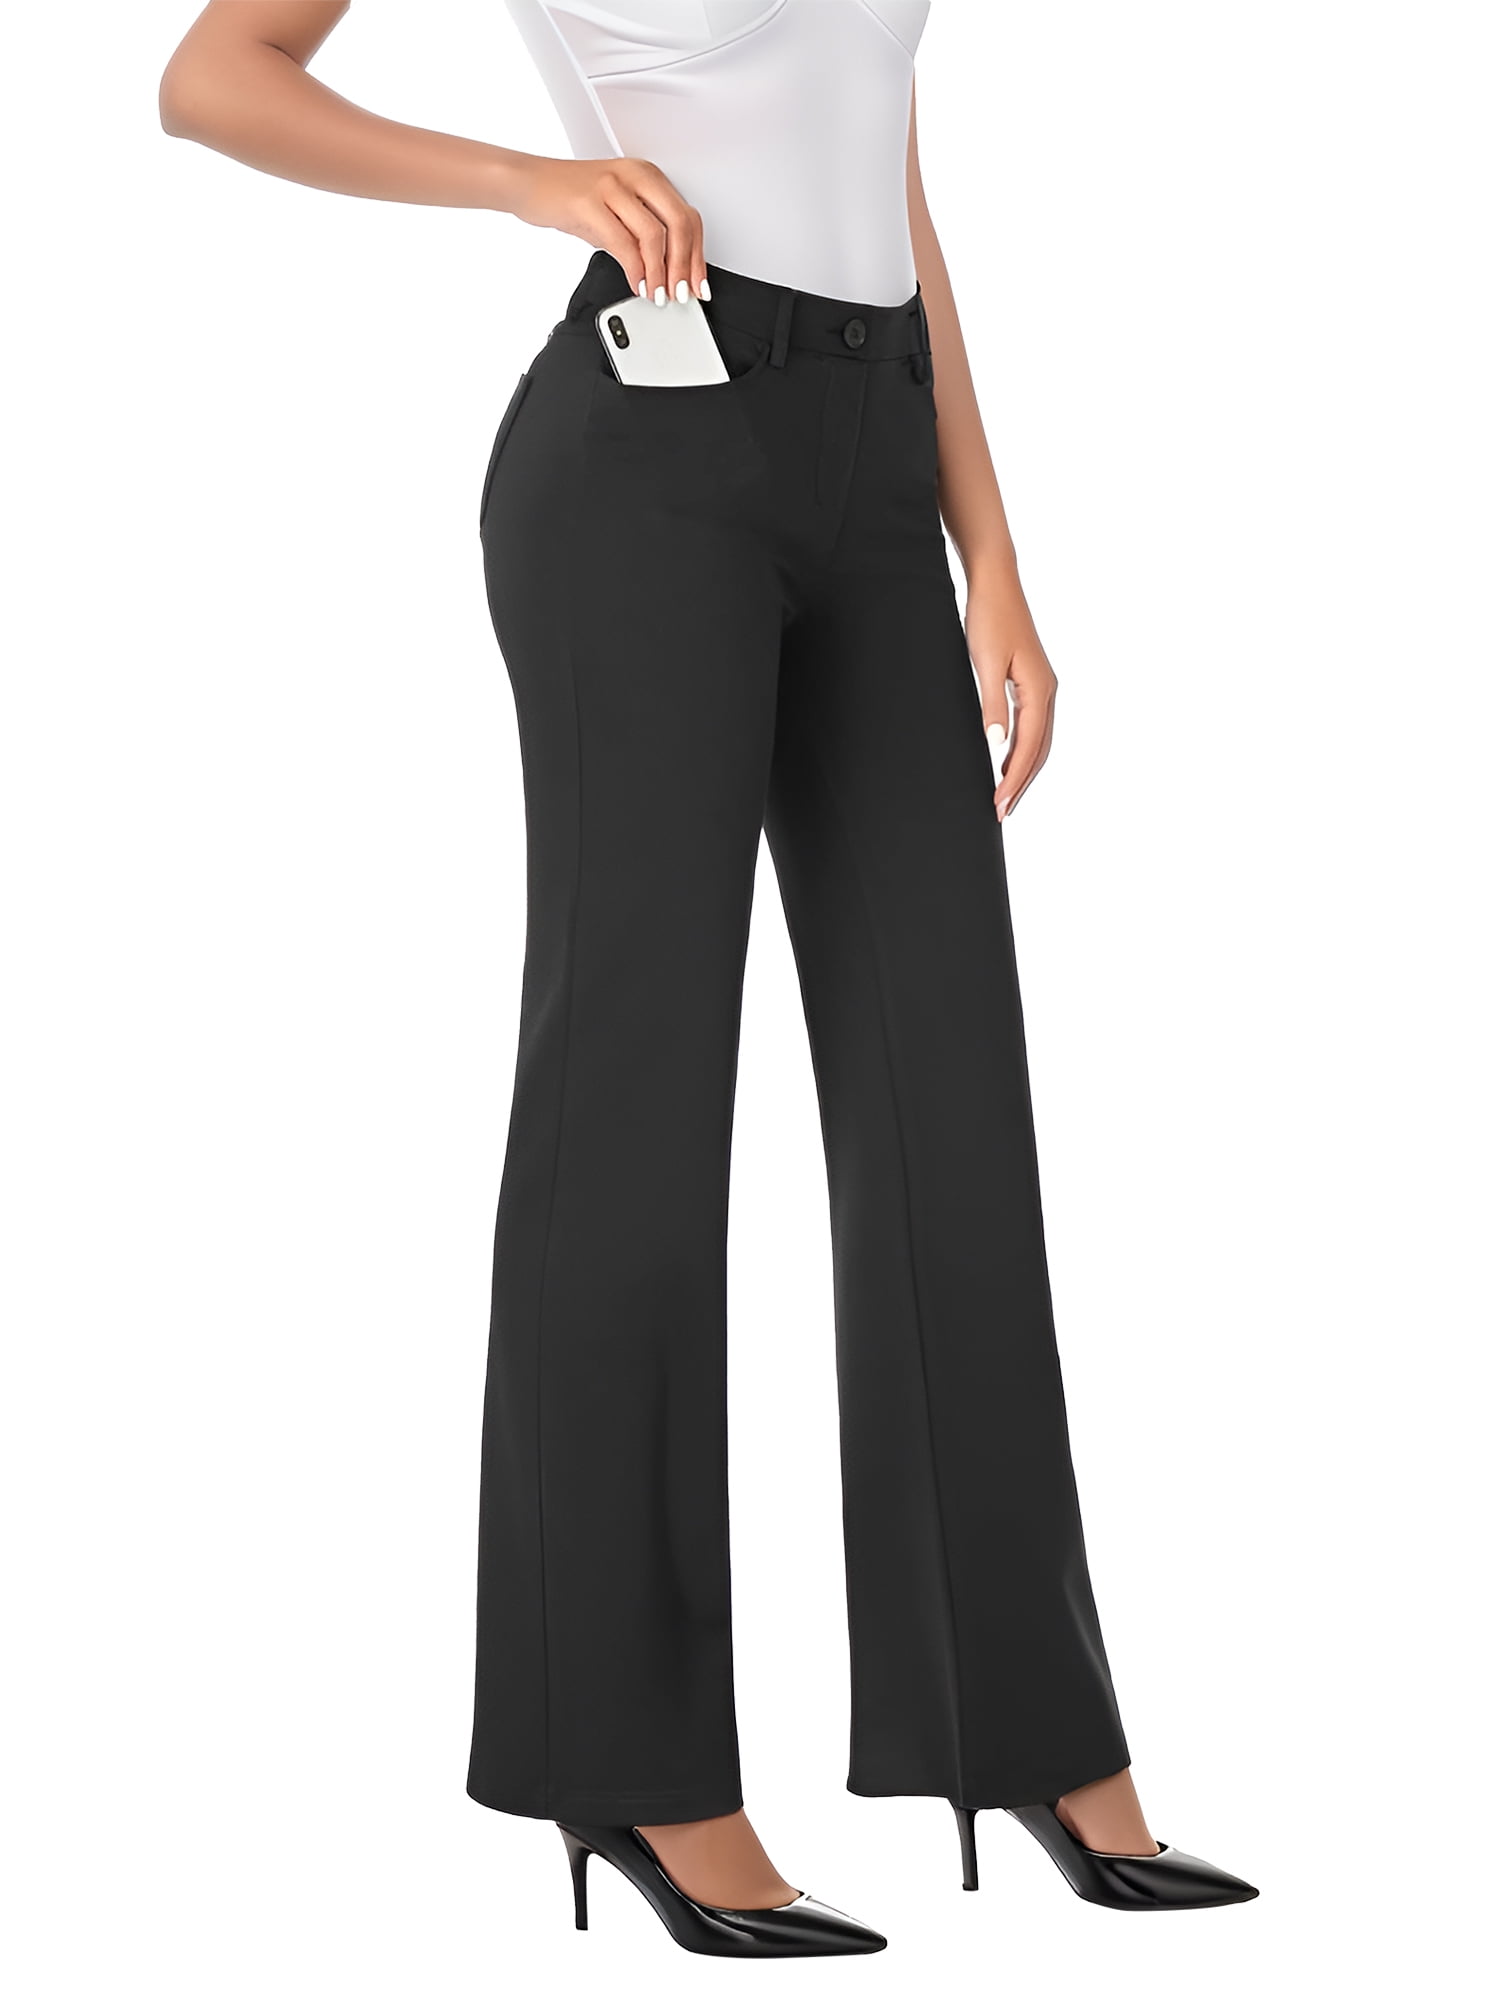 nsendm Female Pants Adult Pant Suits for Women Business Casual plus Size  Womens Trousers Mid Waist Black Batterflies Short Pants for Women(Pink, S)  